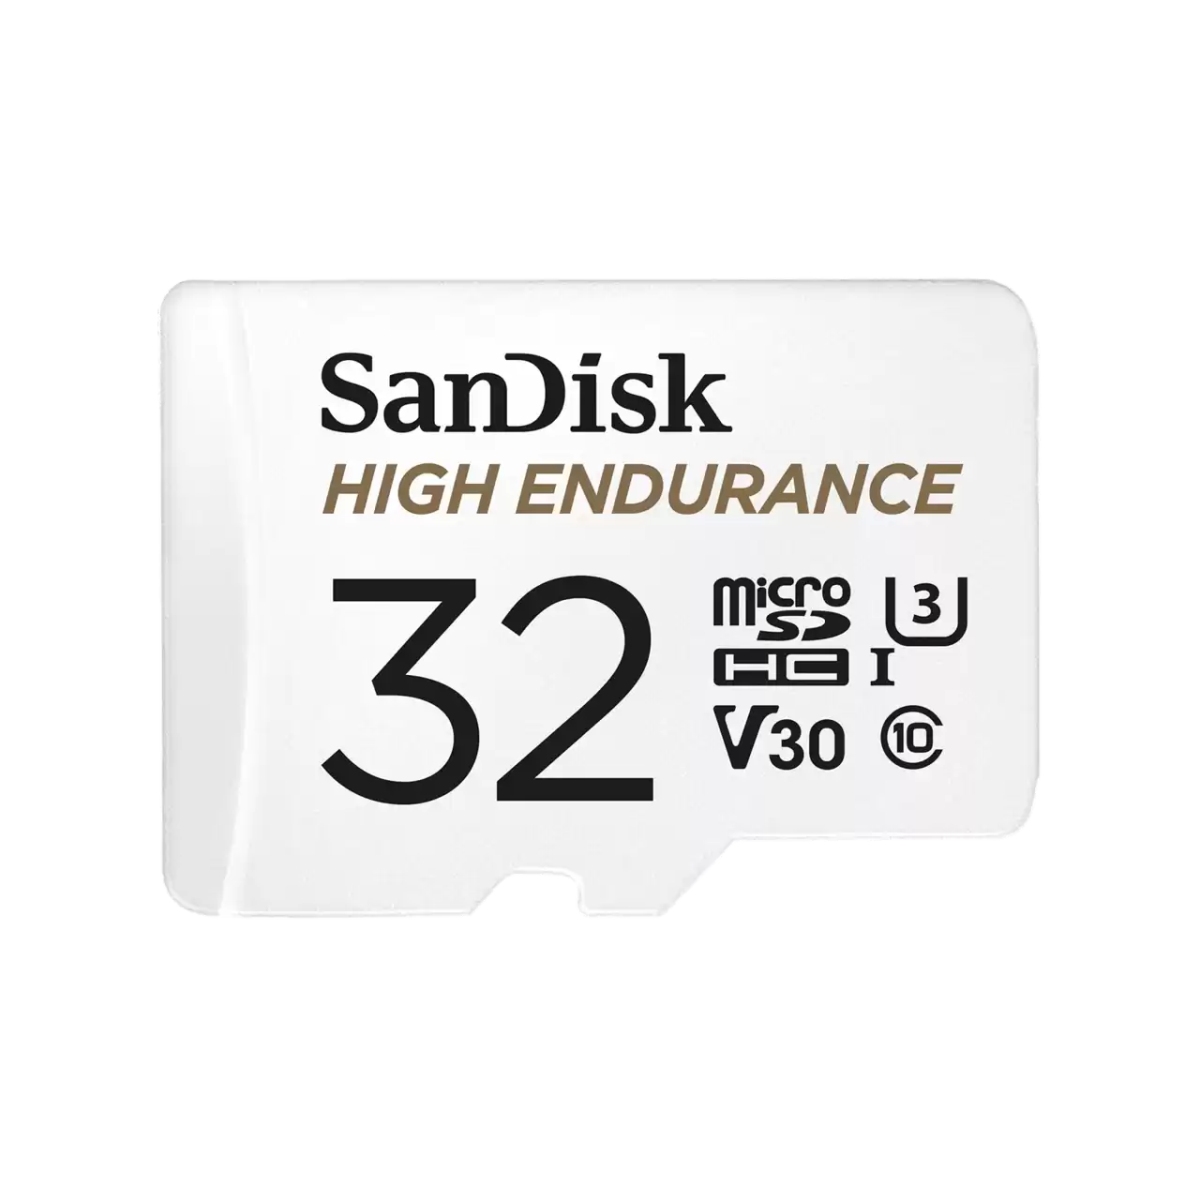 SanDisk High Endurance/micro SDHC/32GB/100MBps/UHS-I U3 / Class 10/+ A